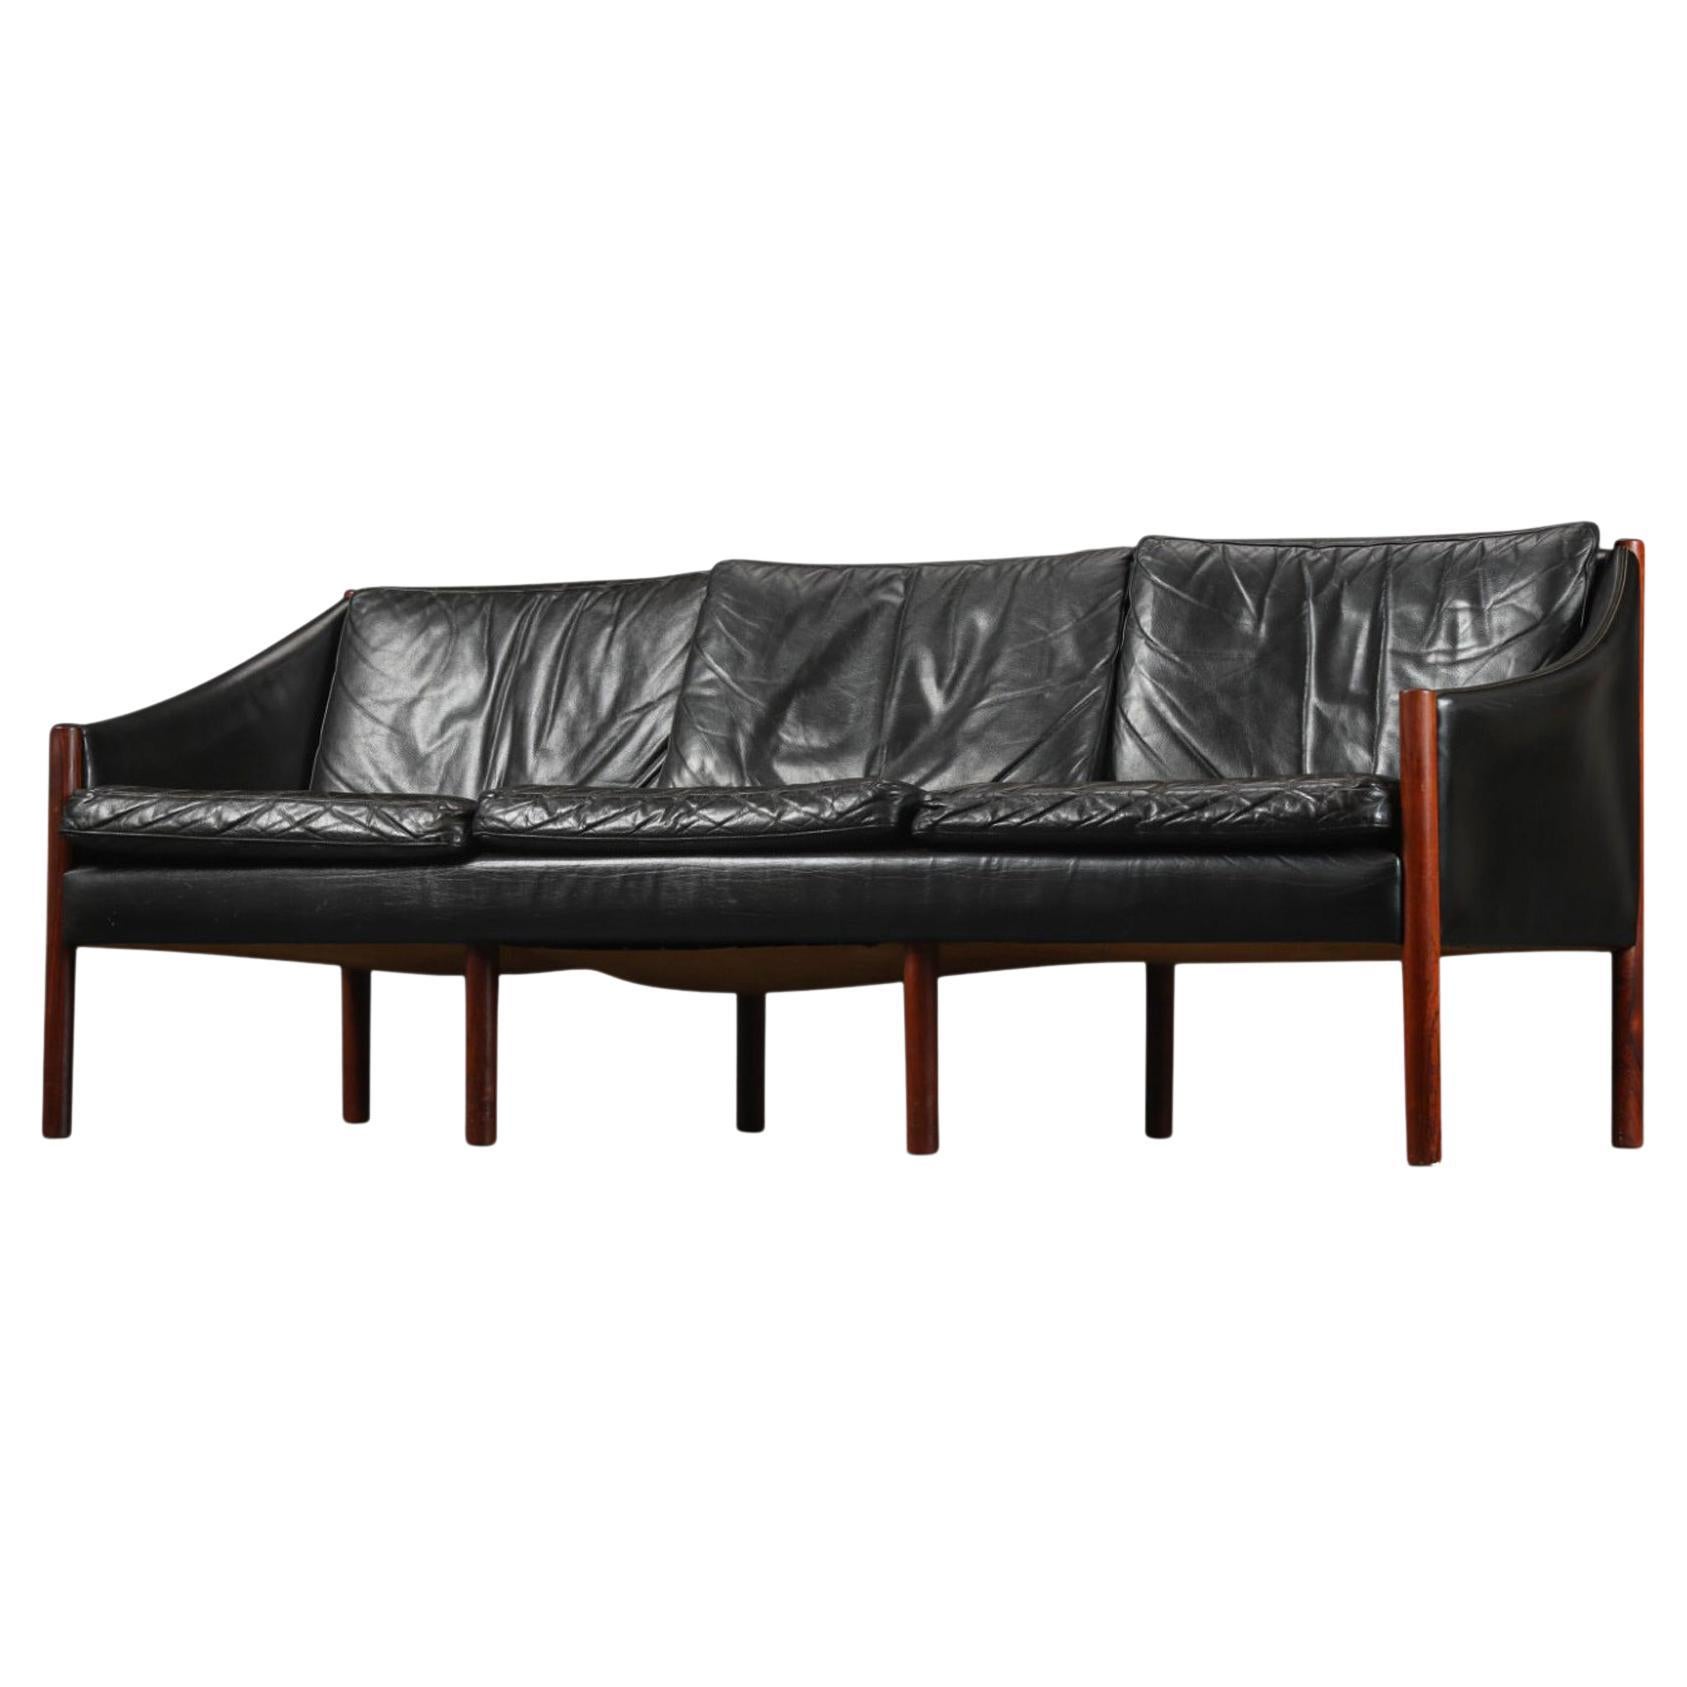 Unique Danish Modern Sofa in Rosewood + Black Leather